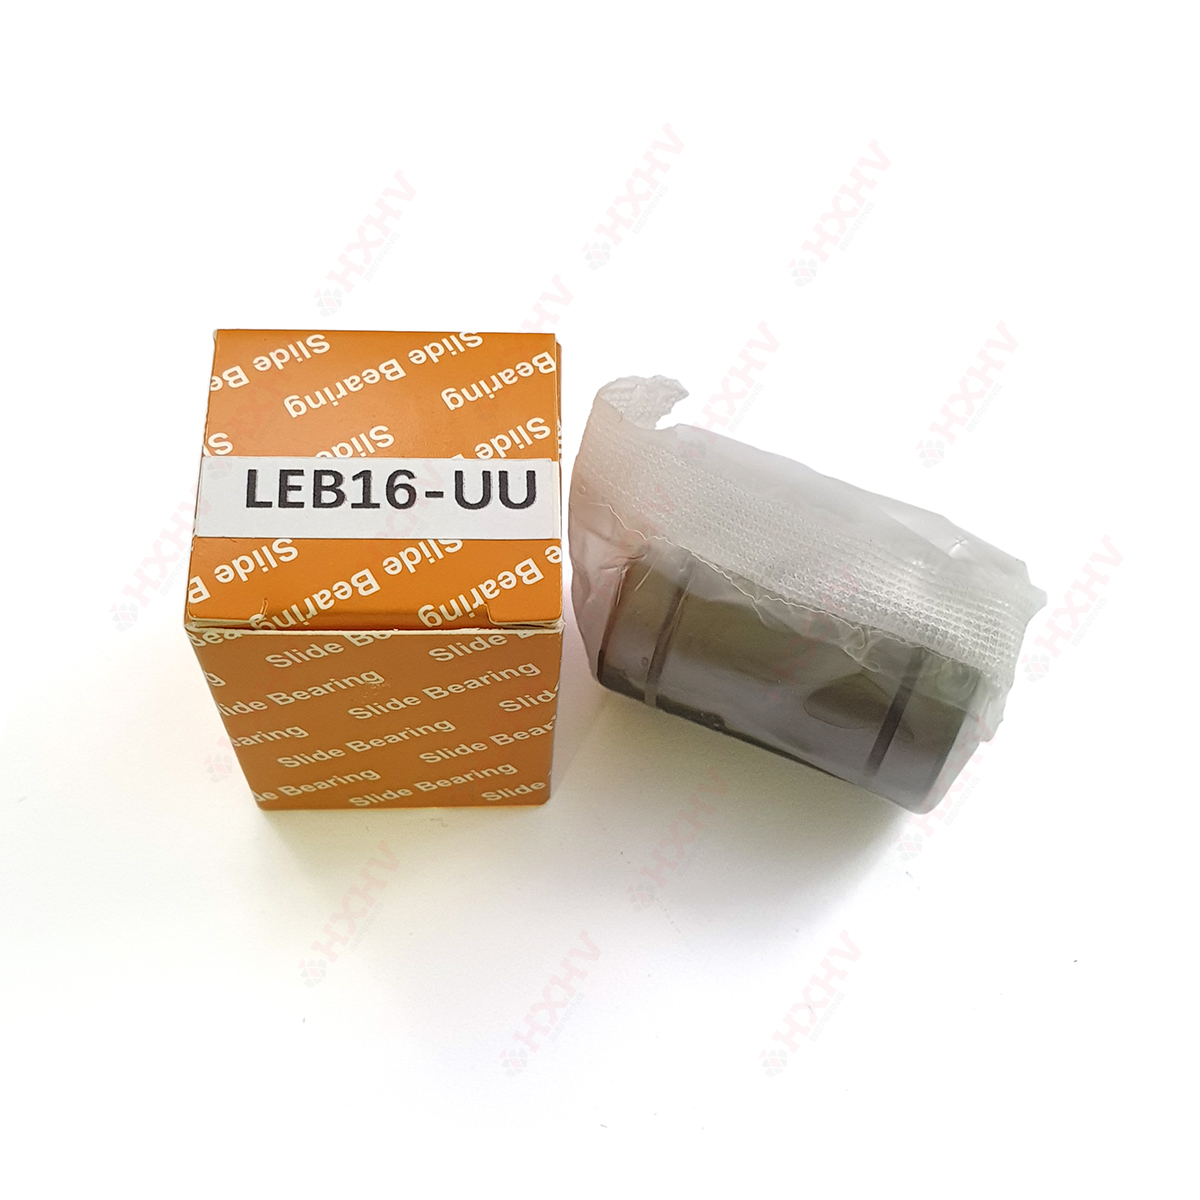 LEB16-UU 16x26x36 mm HXHV linear bushing bearing (3)